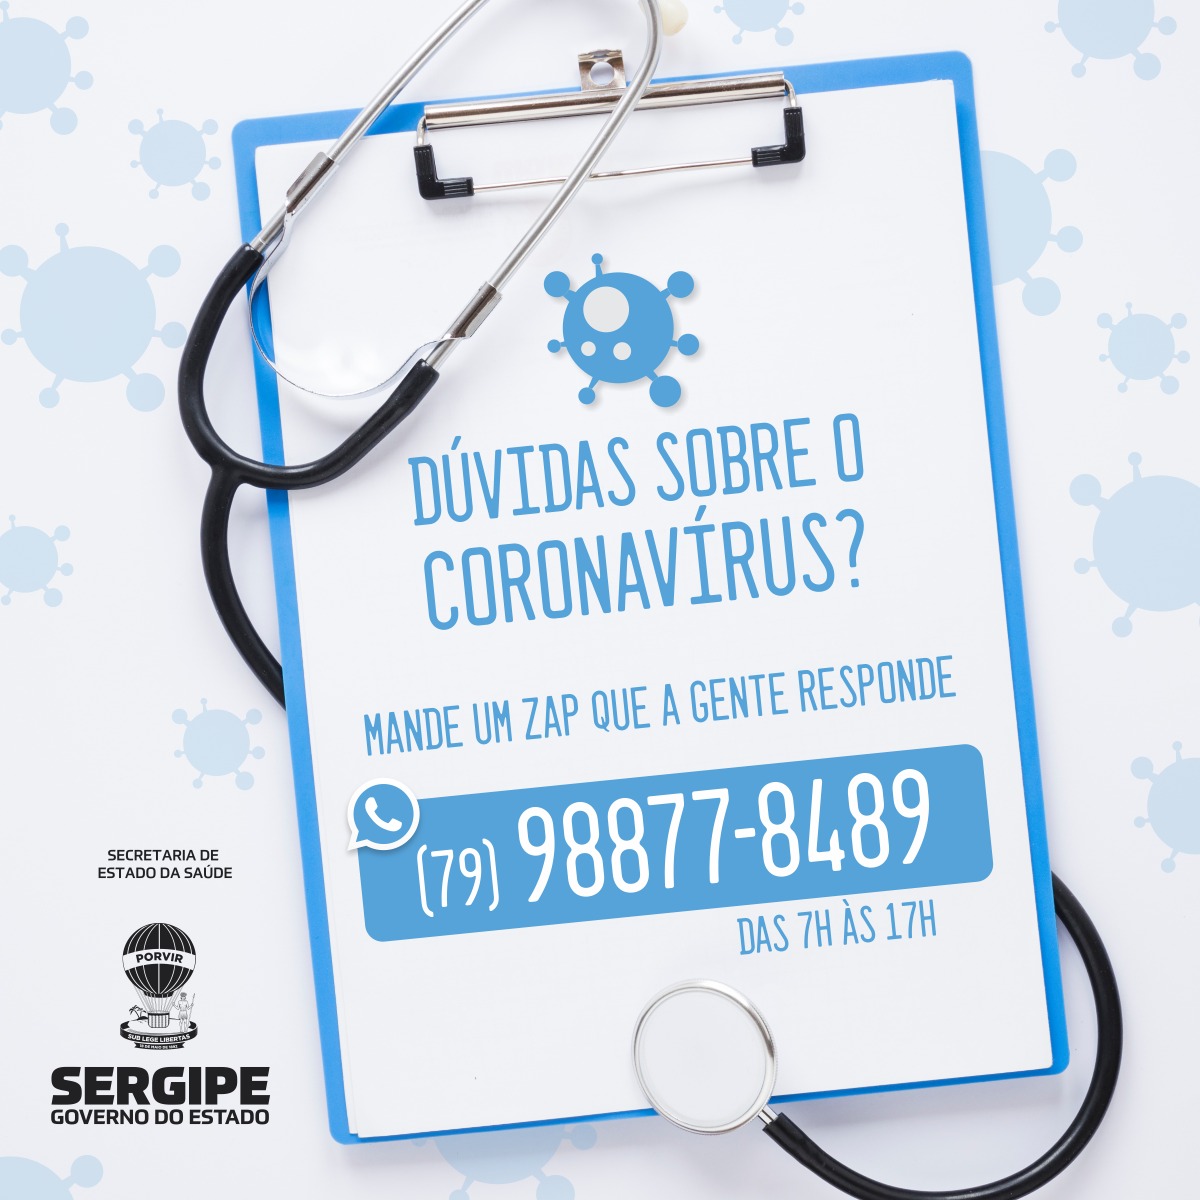 Governo disponibiliza novo Whatsapp para tirar dúvidas sobre Coronavírus